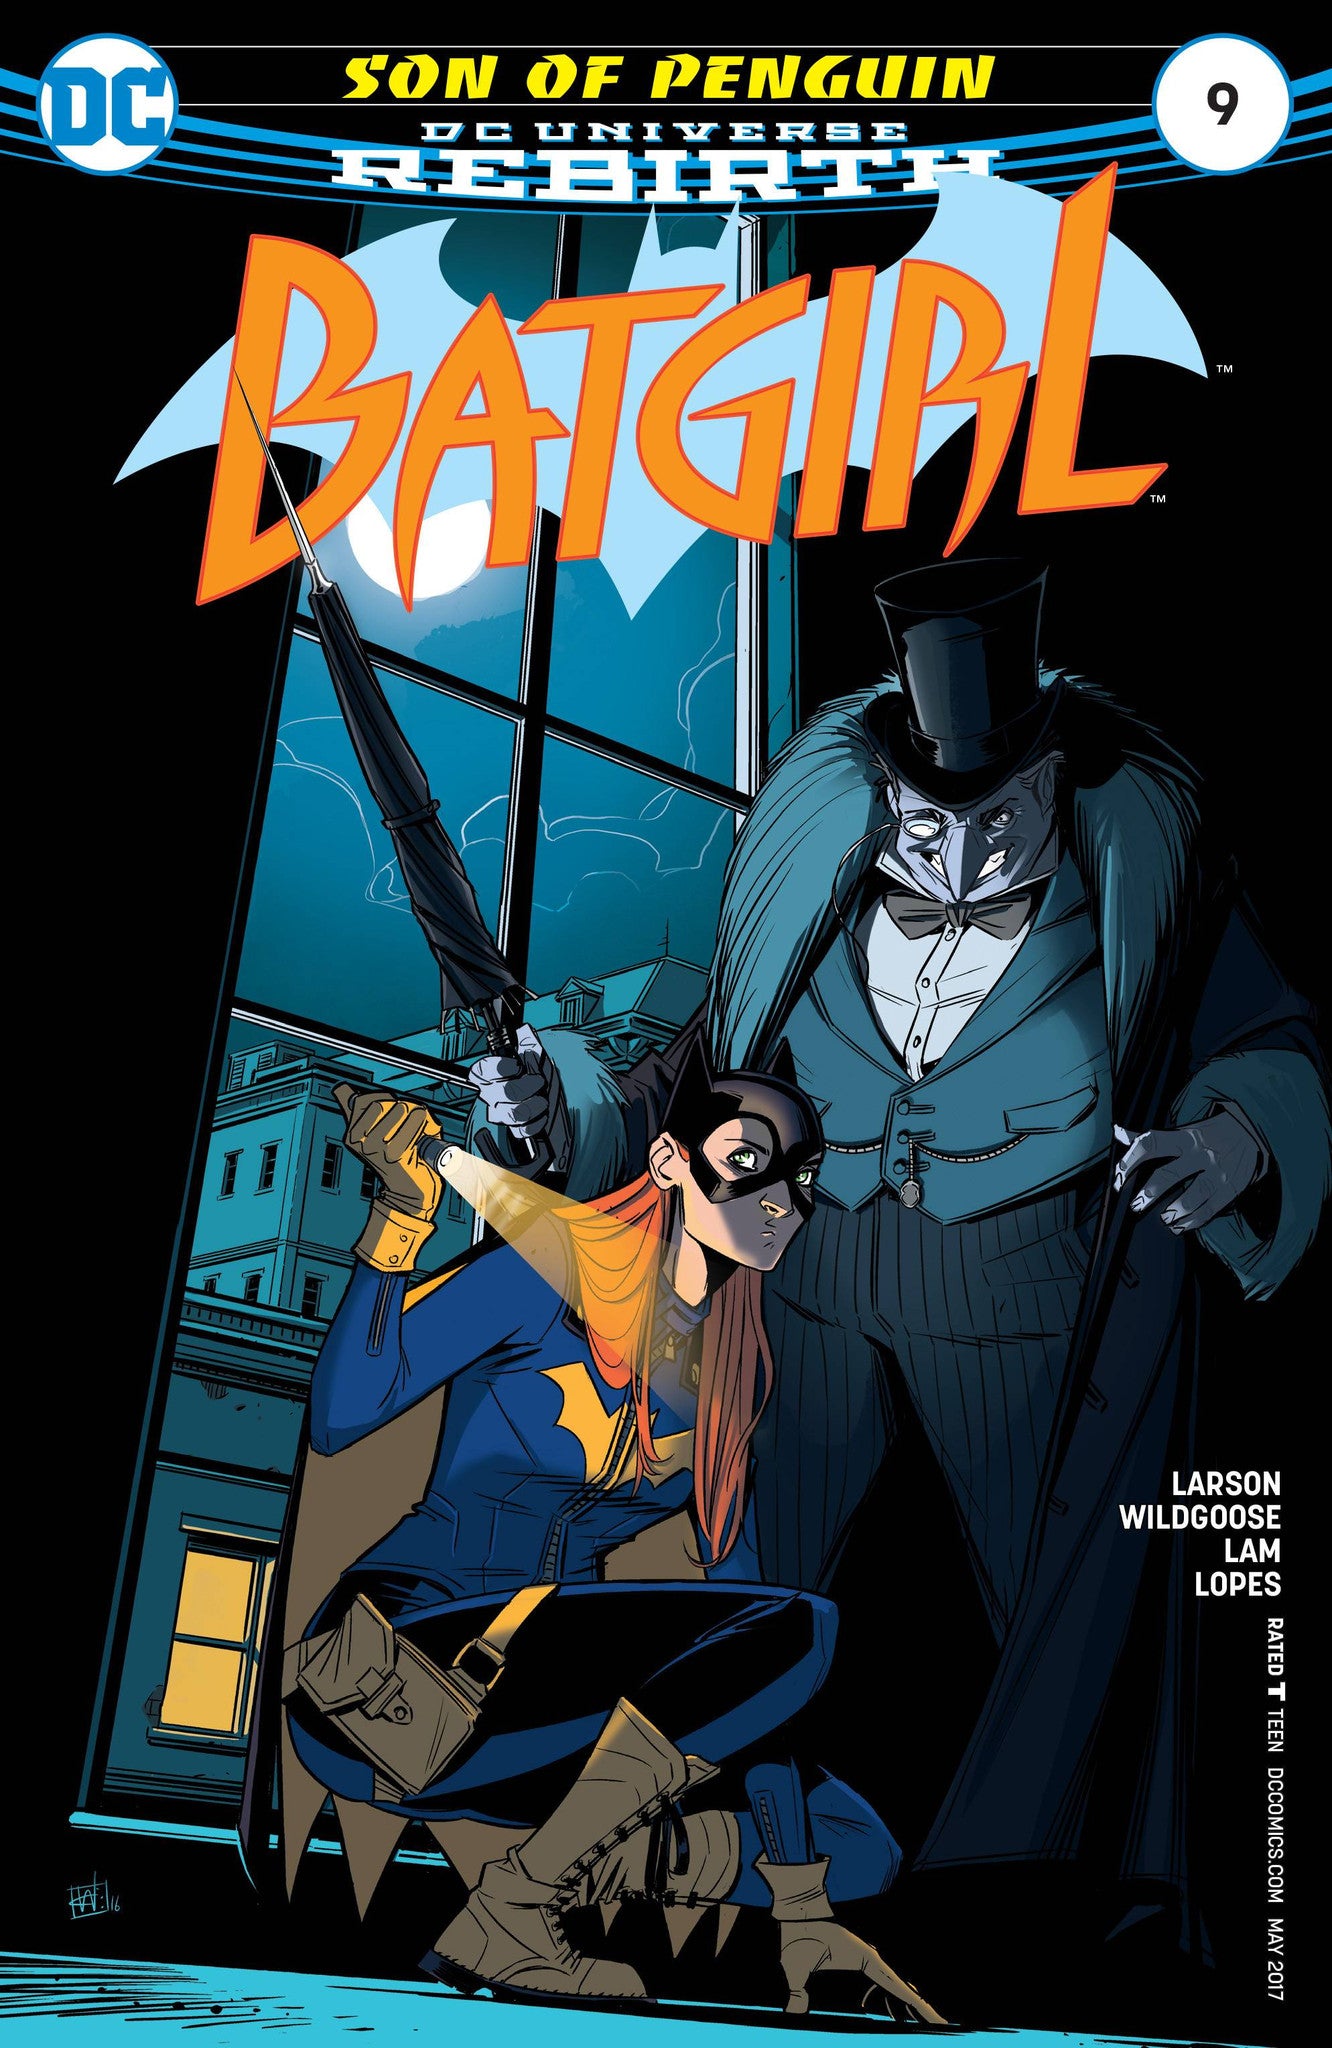 BATGIRL #9 COVER